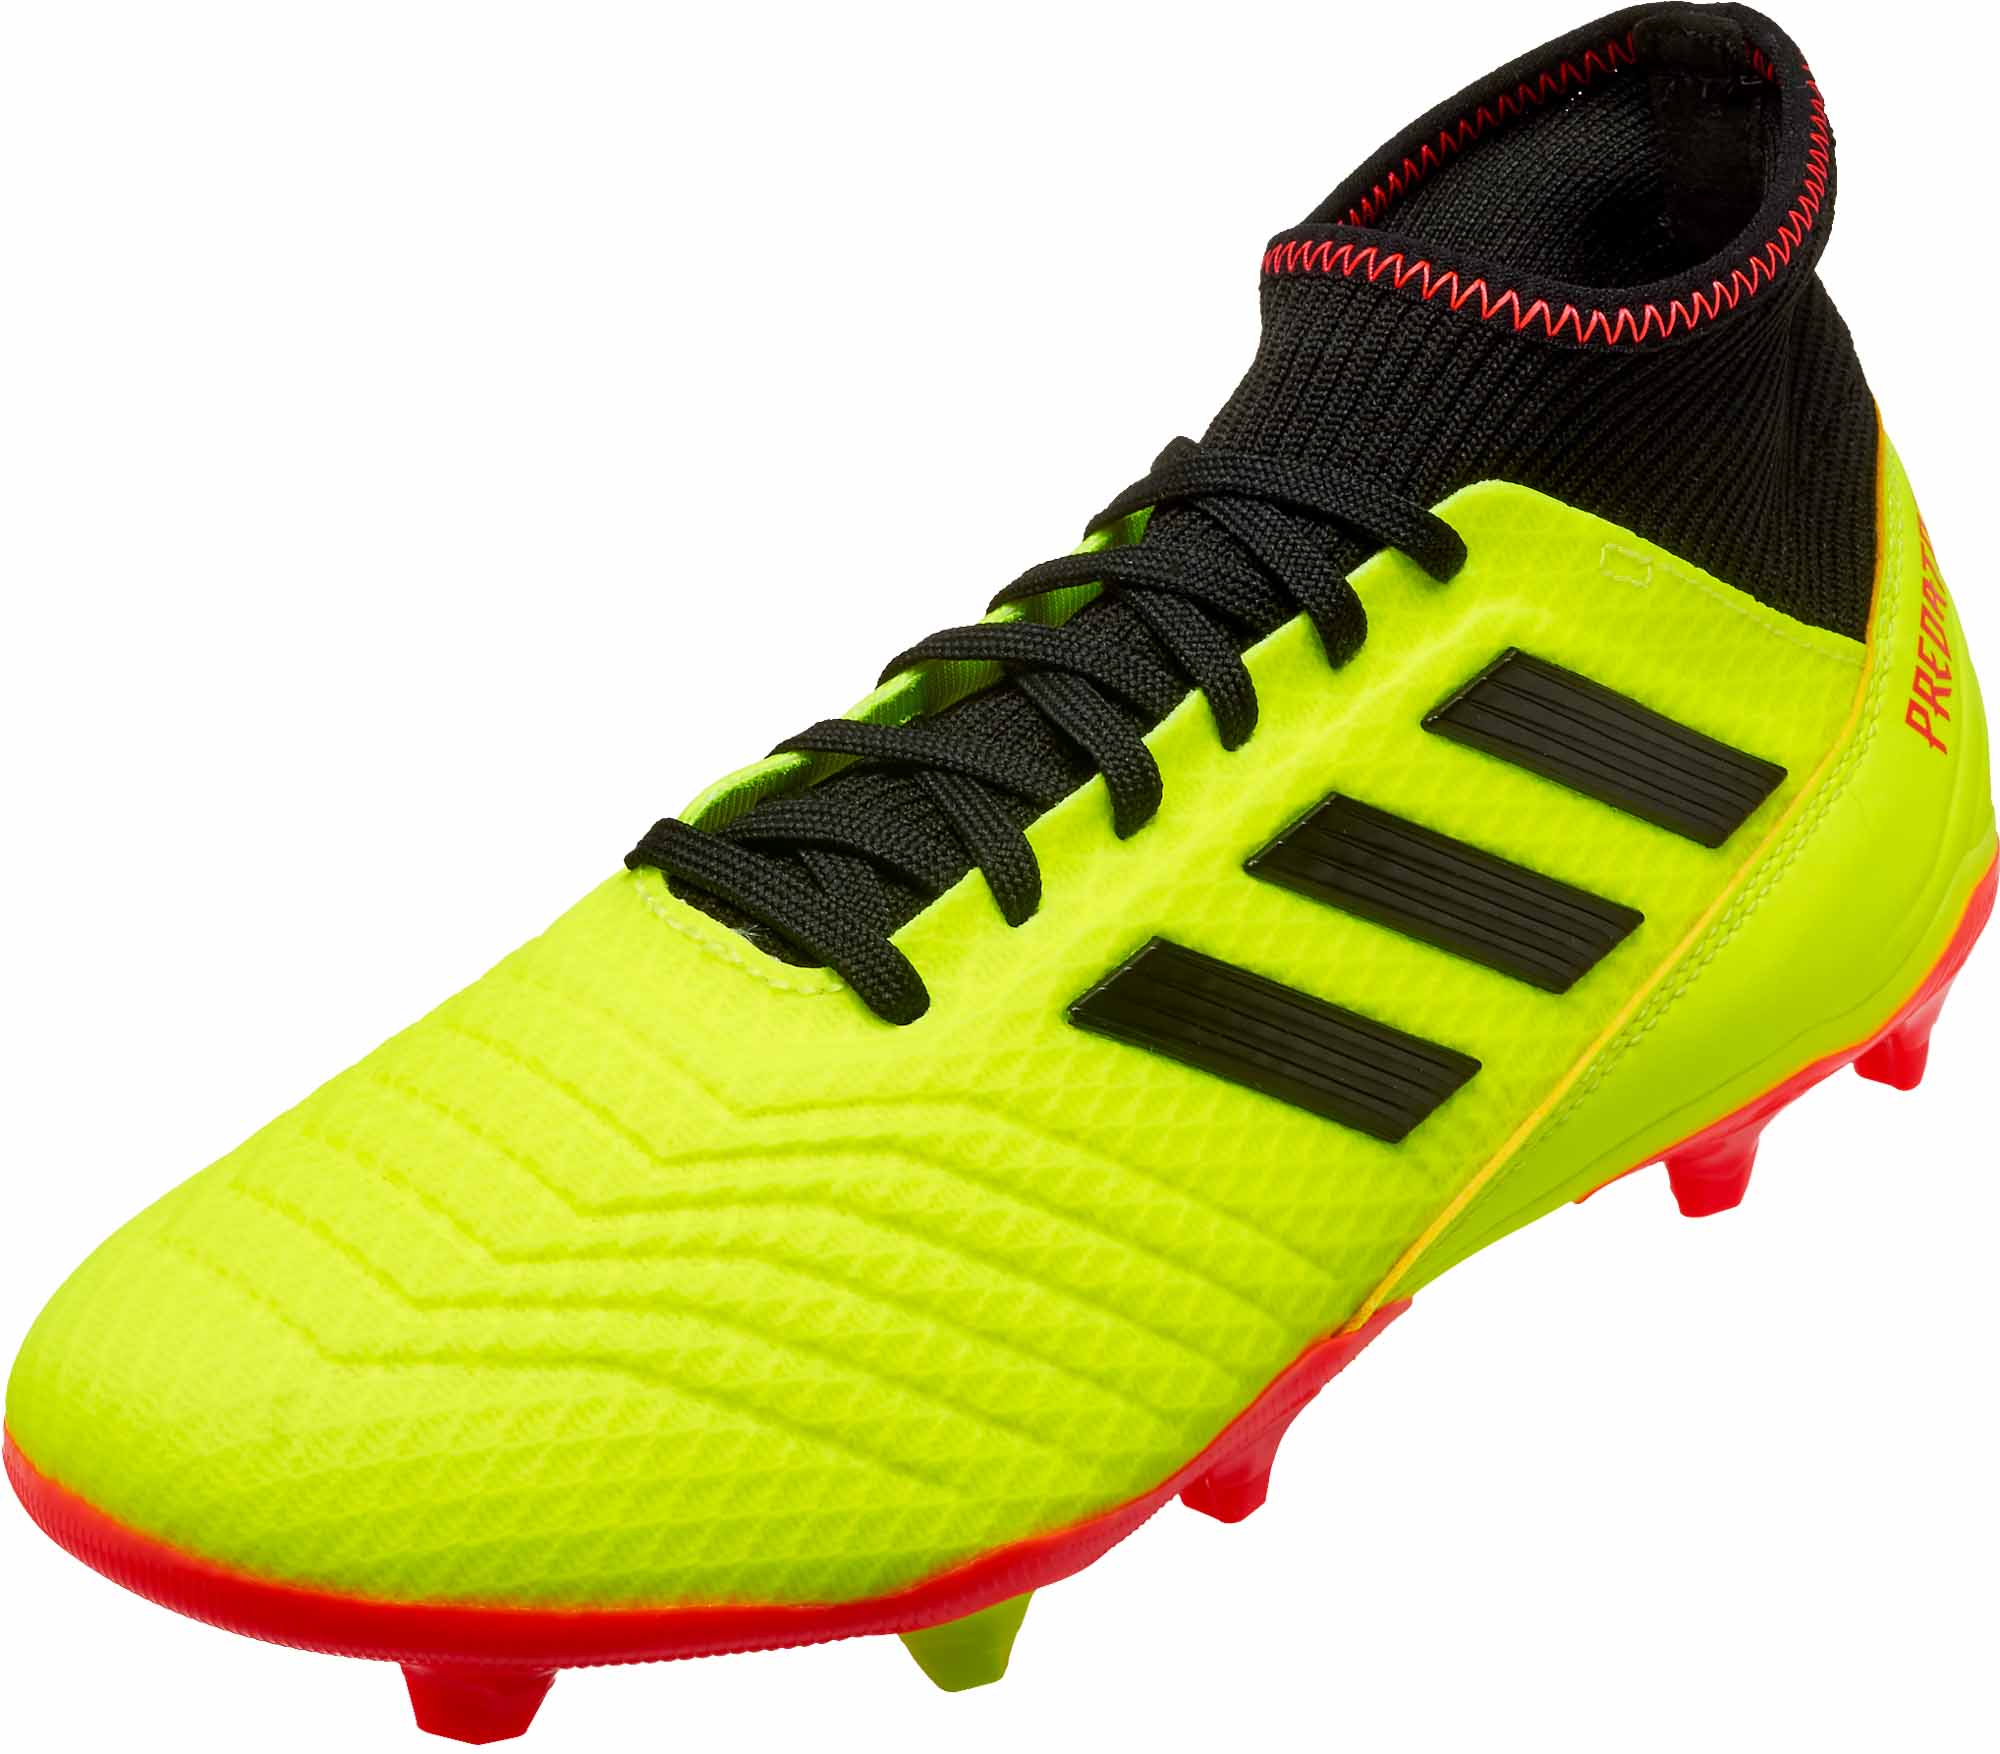 adidas Predator 18.3 FG - Solar Yellow/Black/Solar Red - Soccer Master